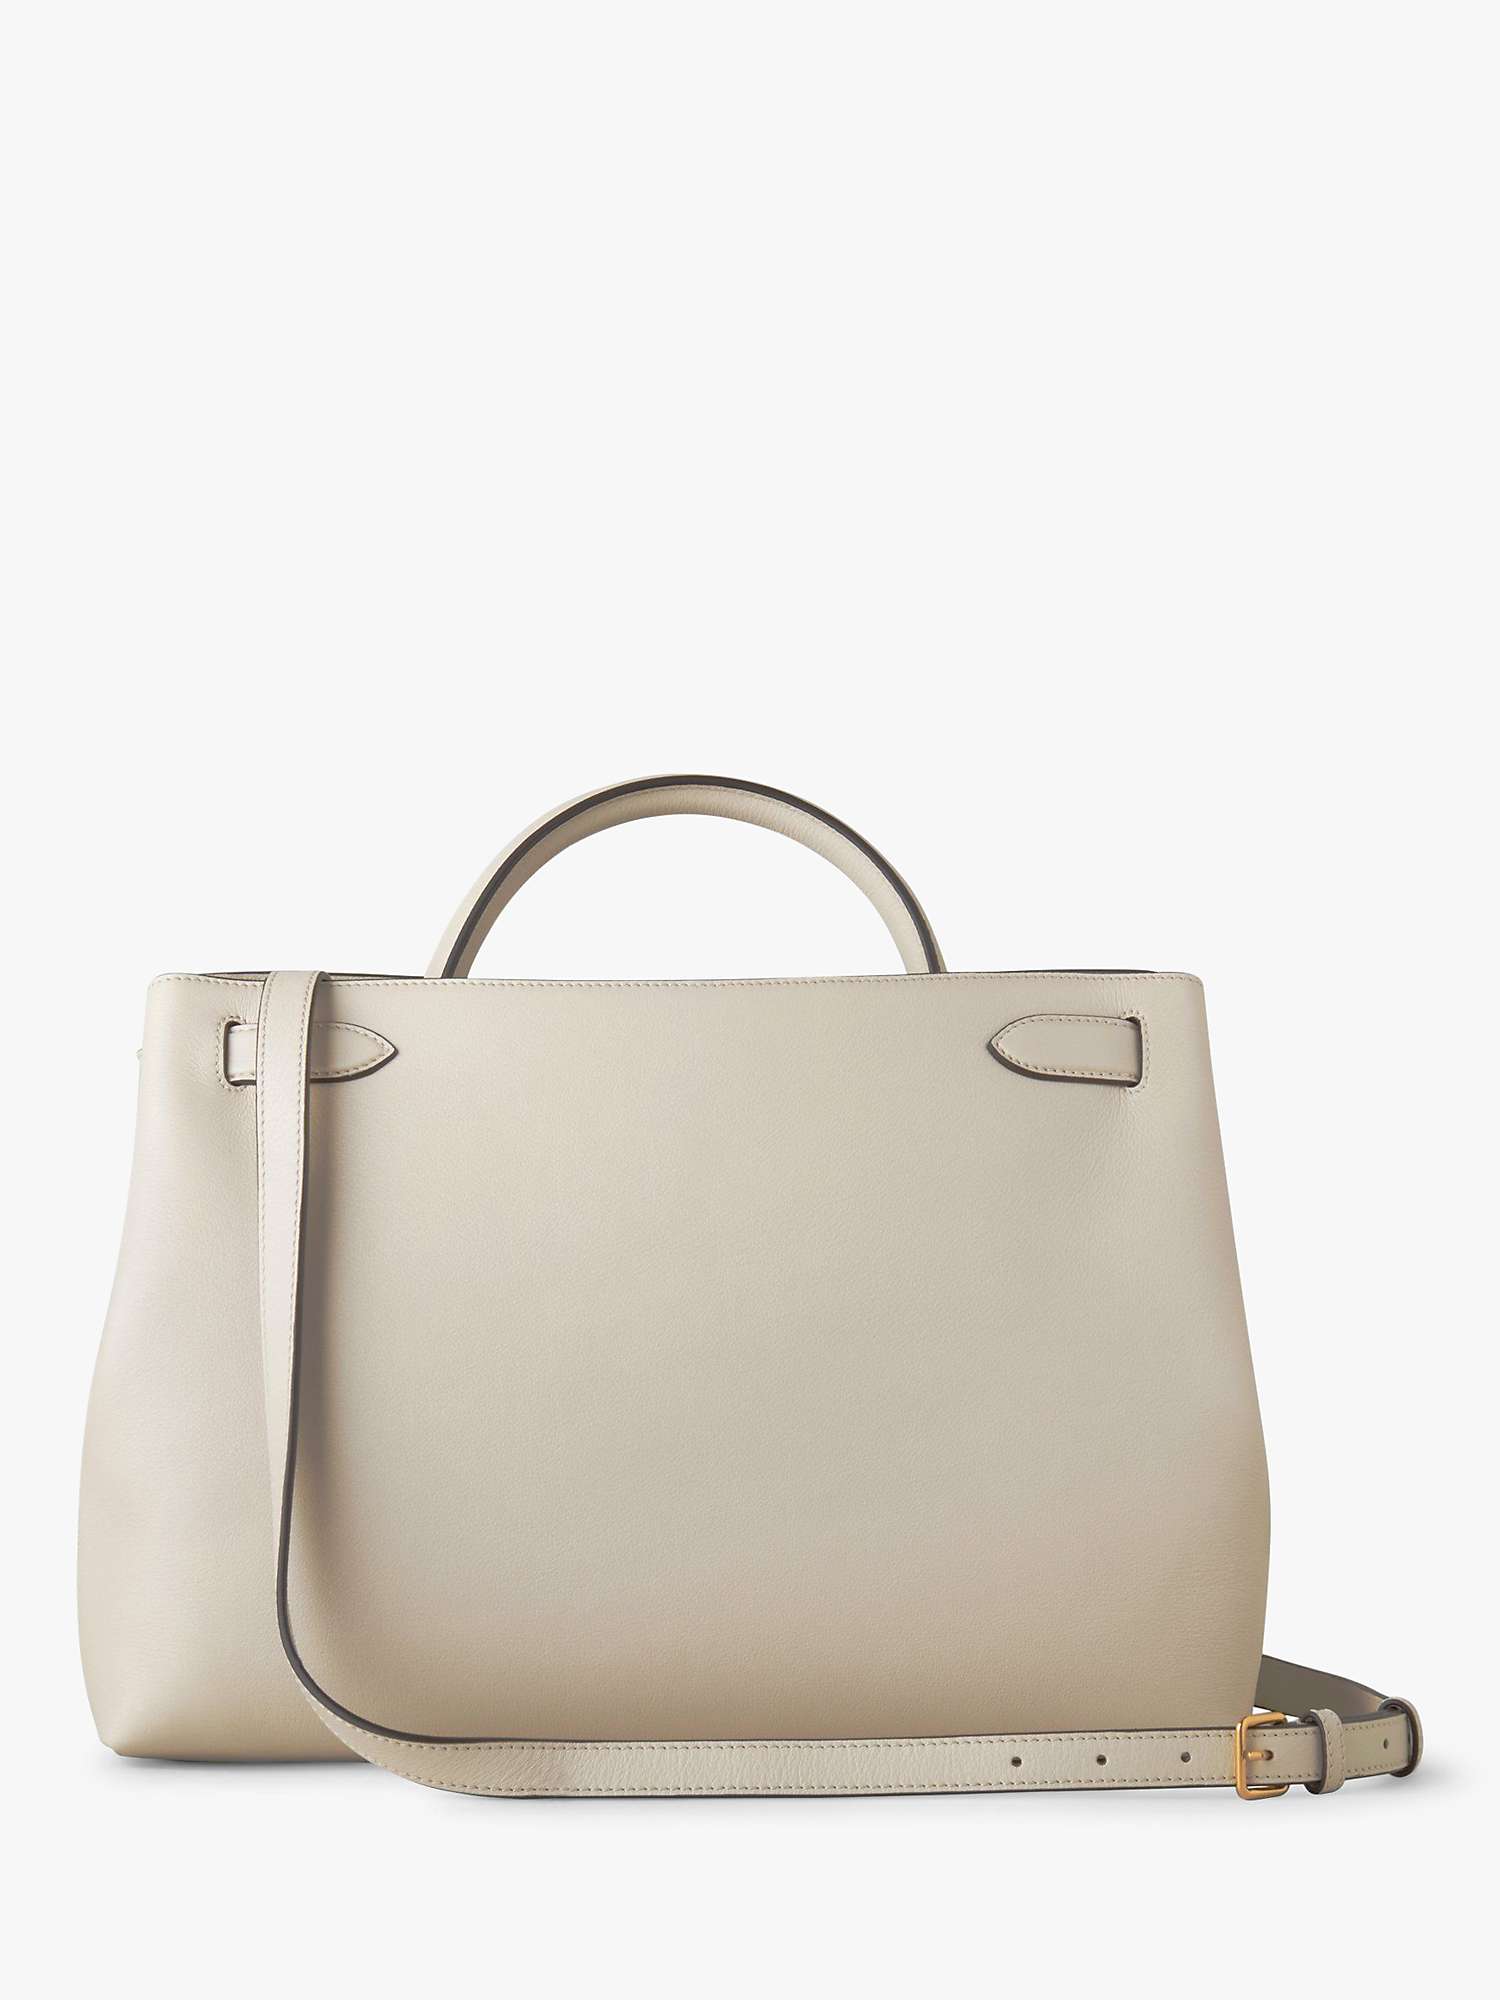 Buy Mulberry Islington Silky Calf Leather Handbag Online at johnlewis.com